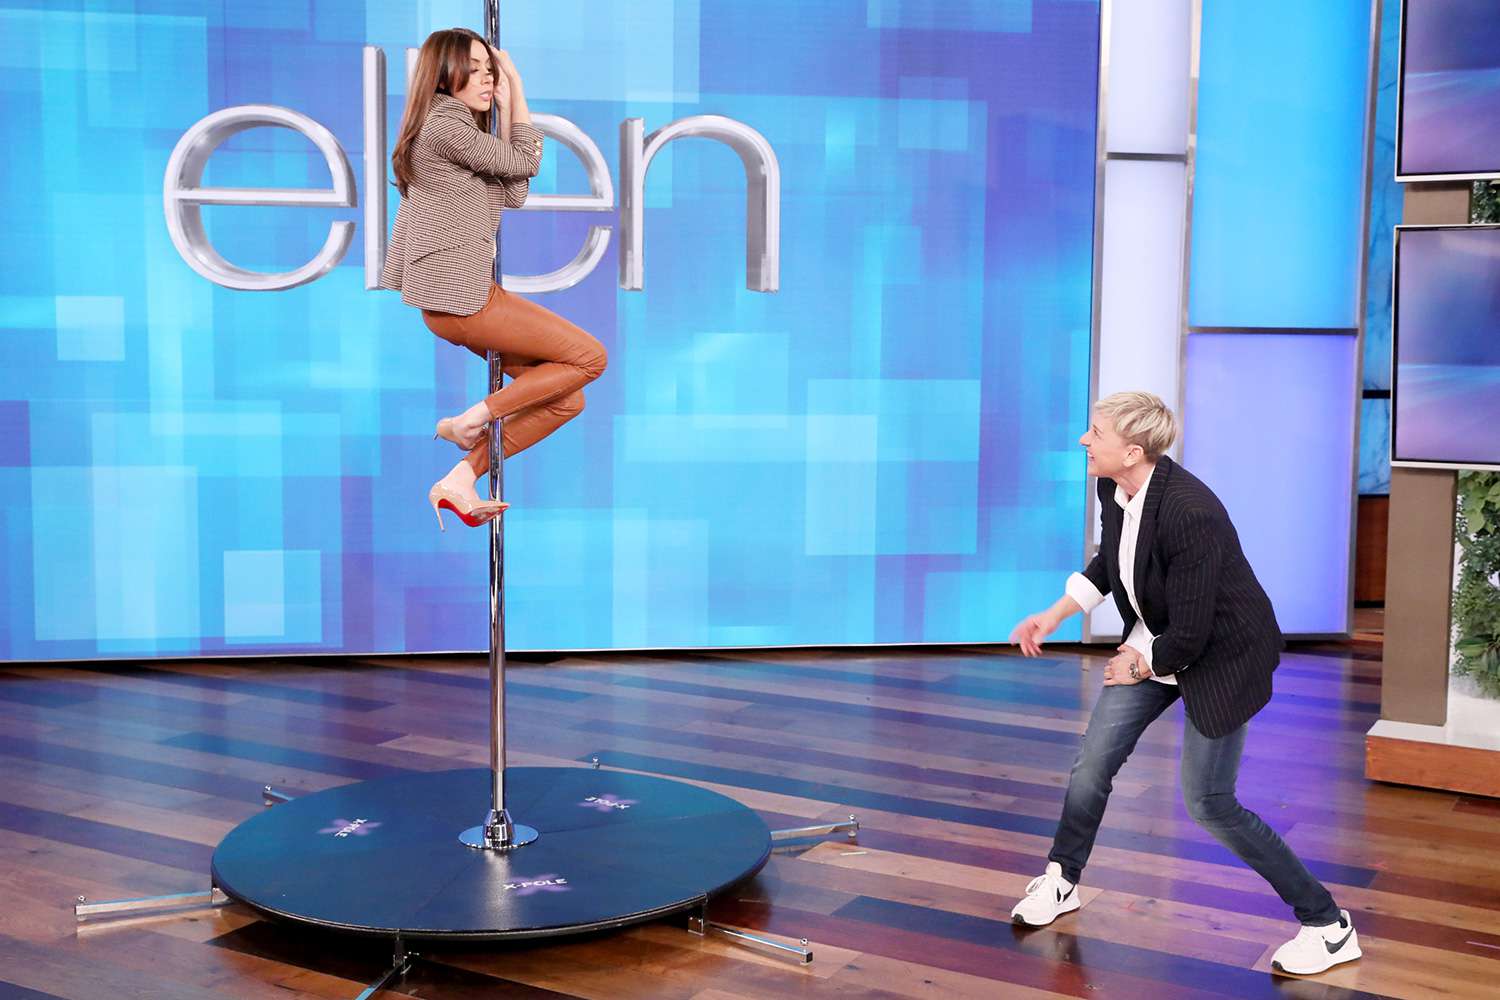 Aubrey Plaza makes an appearance on “The Ellen DeGeneres Show” airing Thursday, January 16th